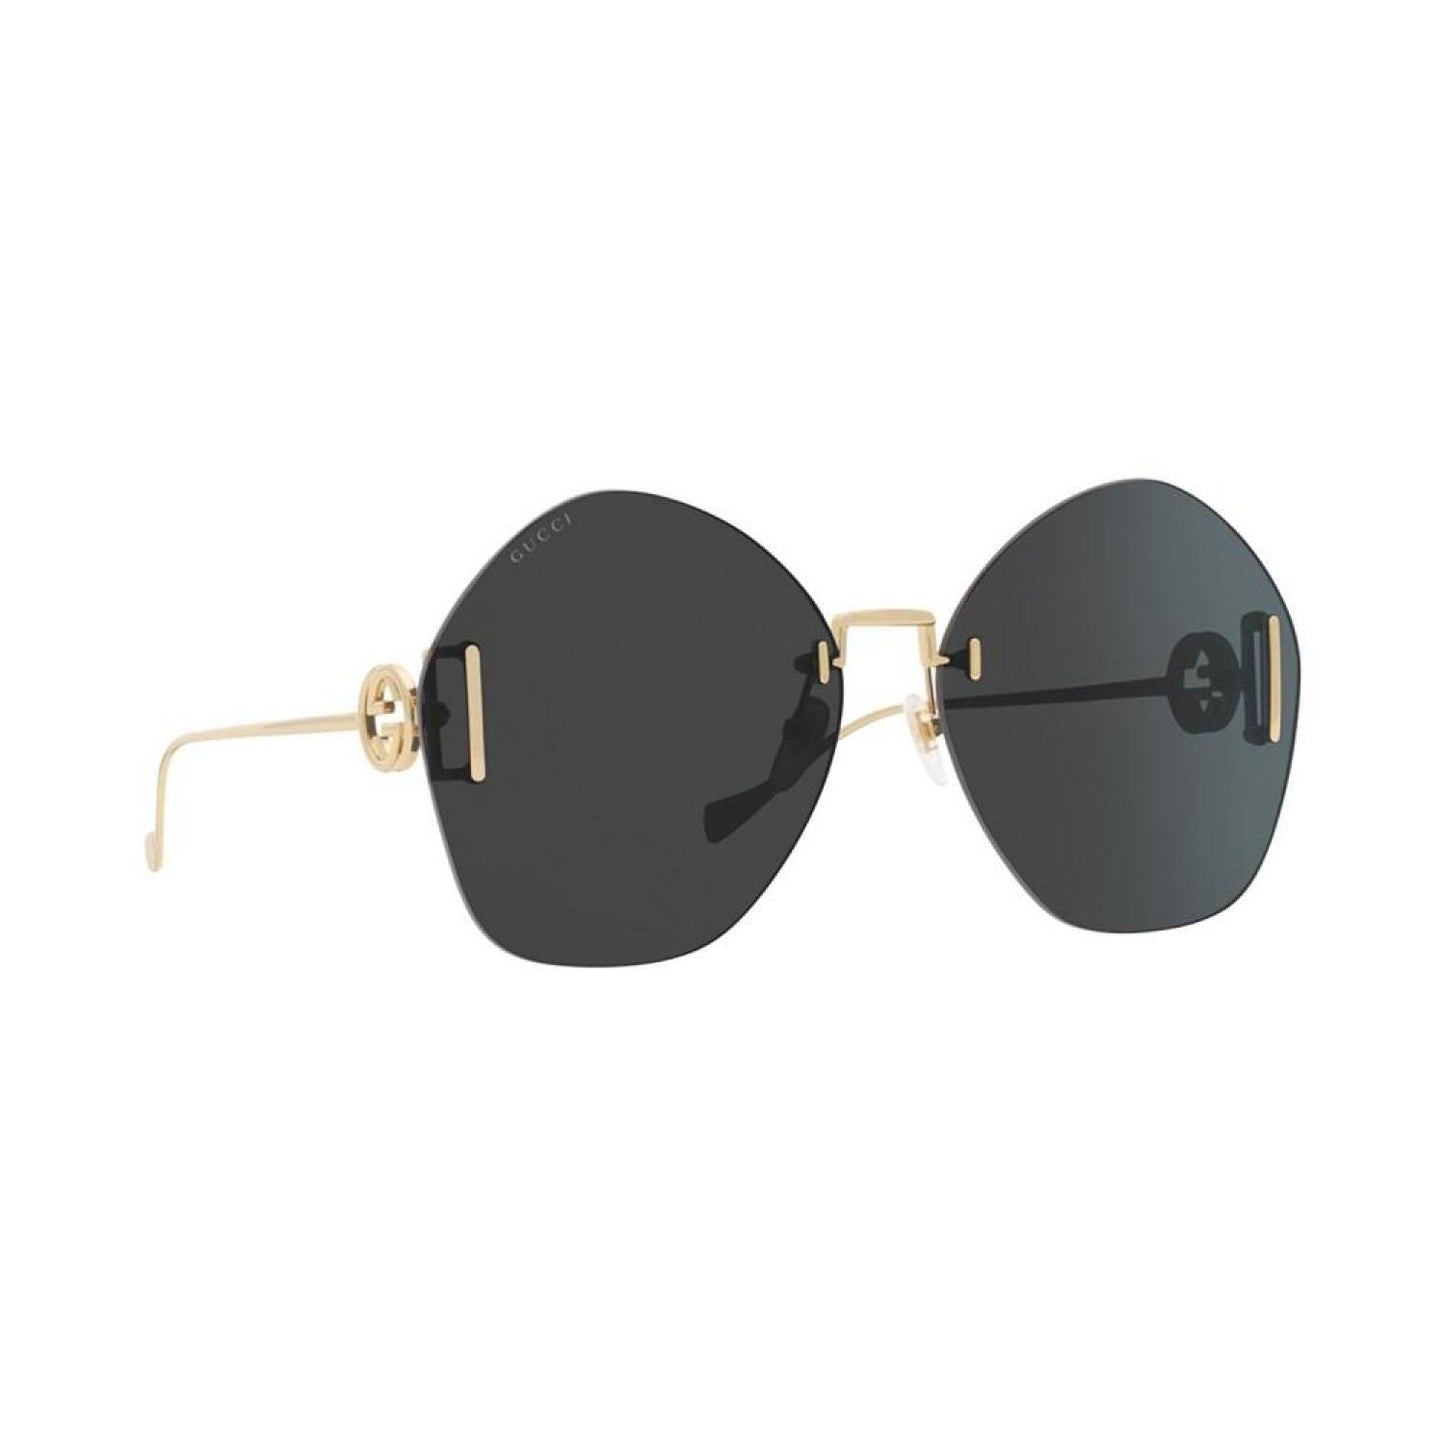 Women's Sunglasses, GC00195965-X